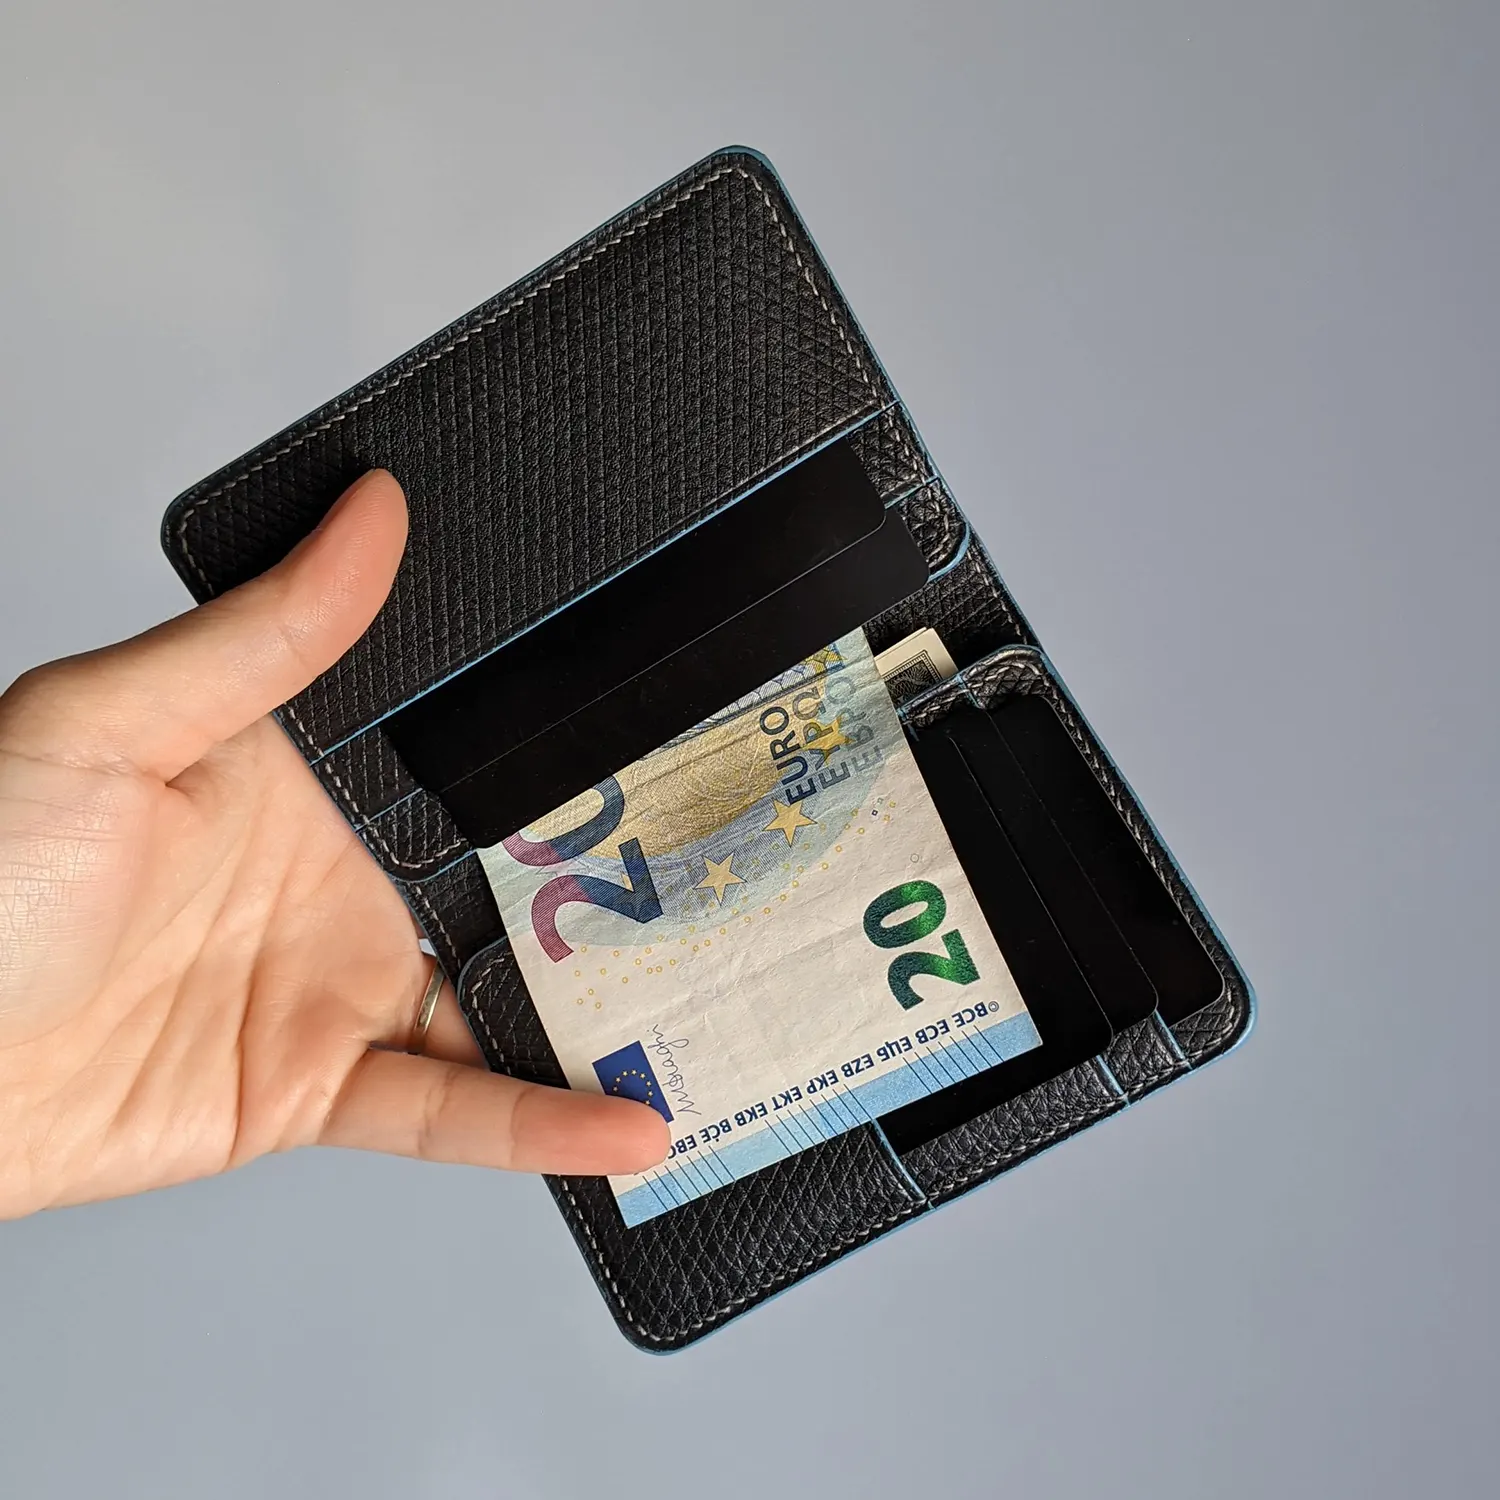 possala designs pocket organizer leather wallet